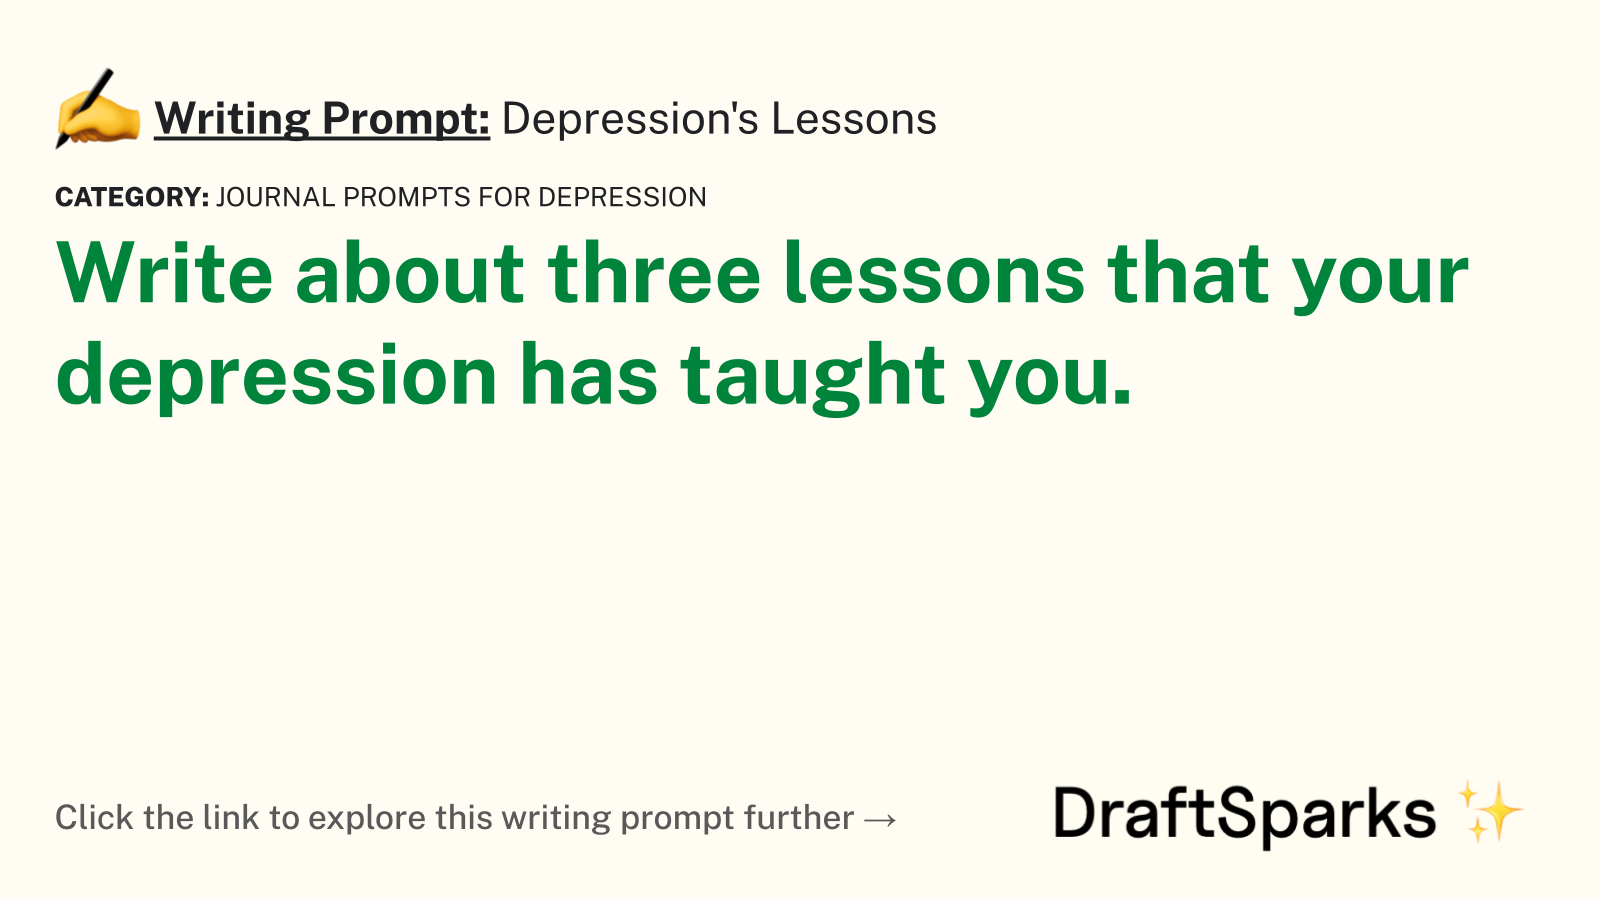 Depression’s Lessons